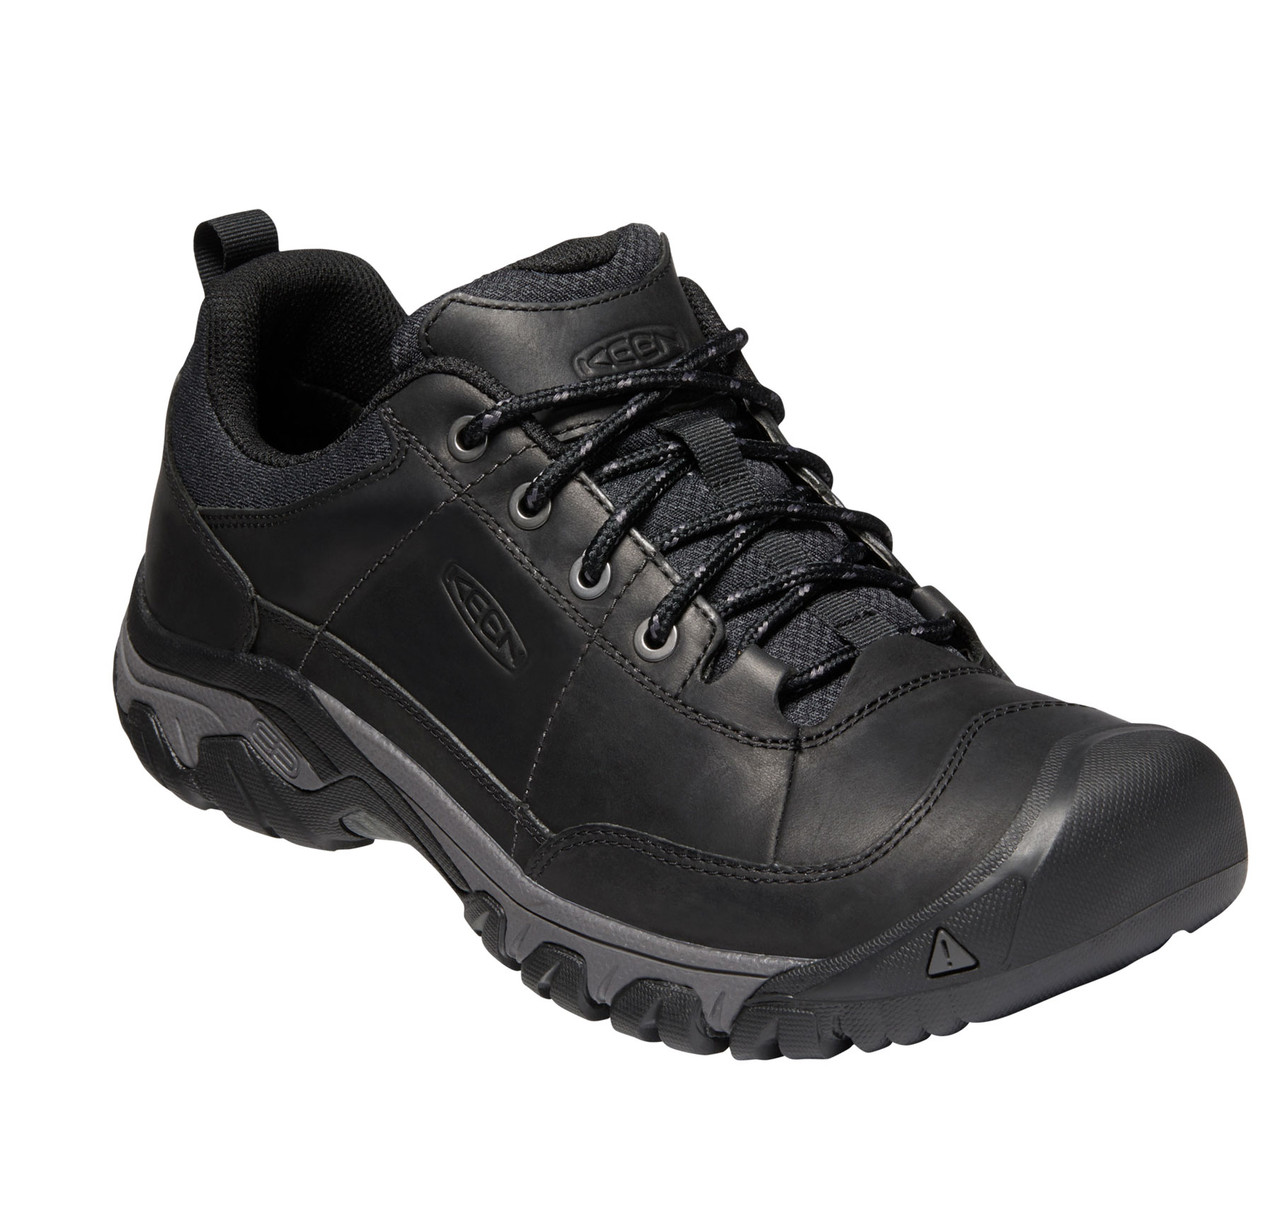 Keen Targhee III Oxford Black/Magnet Shoe Loafer Men's US sizes 7-17 NEW!!! 